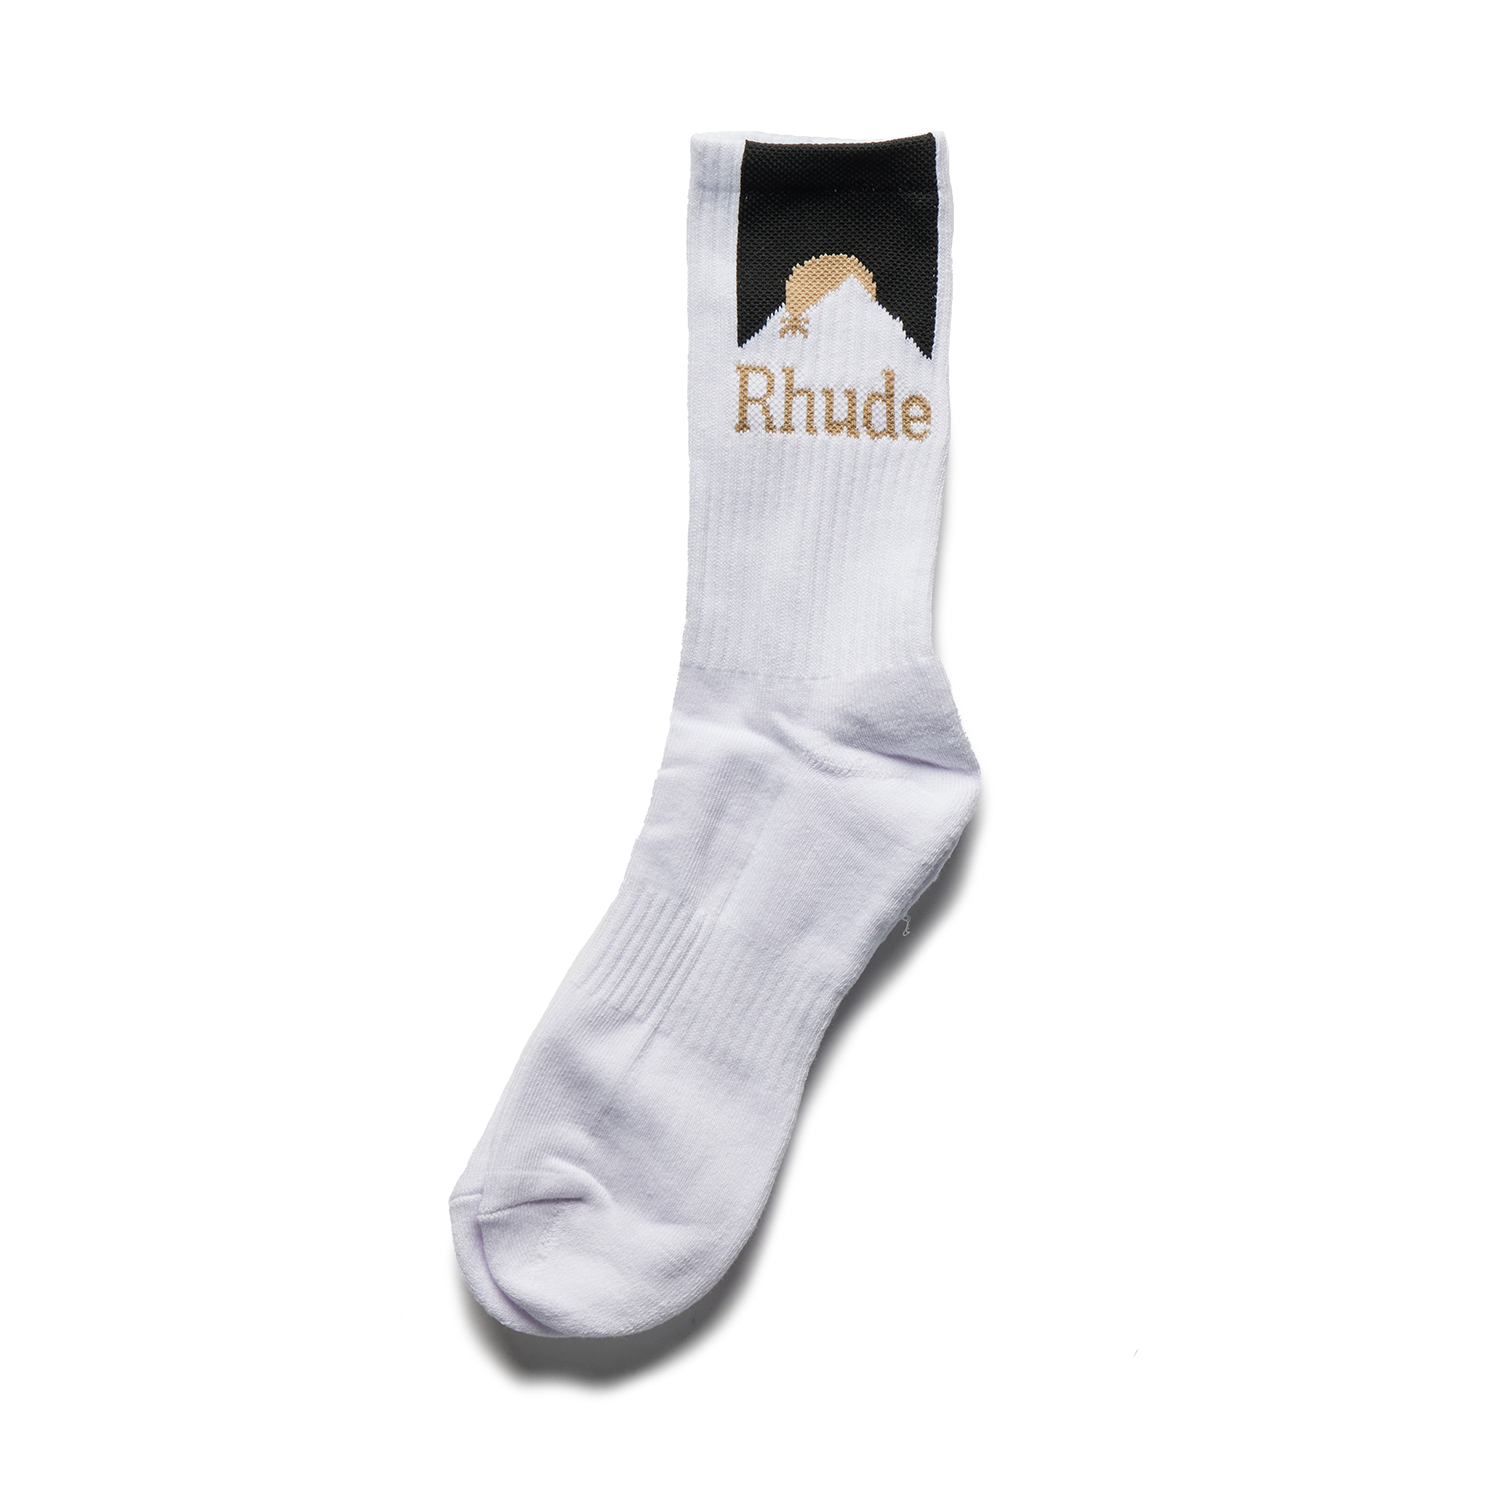 RHUDE - Moonlight Sock (White/Black/Yellow) product image